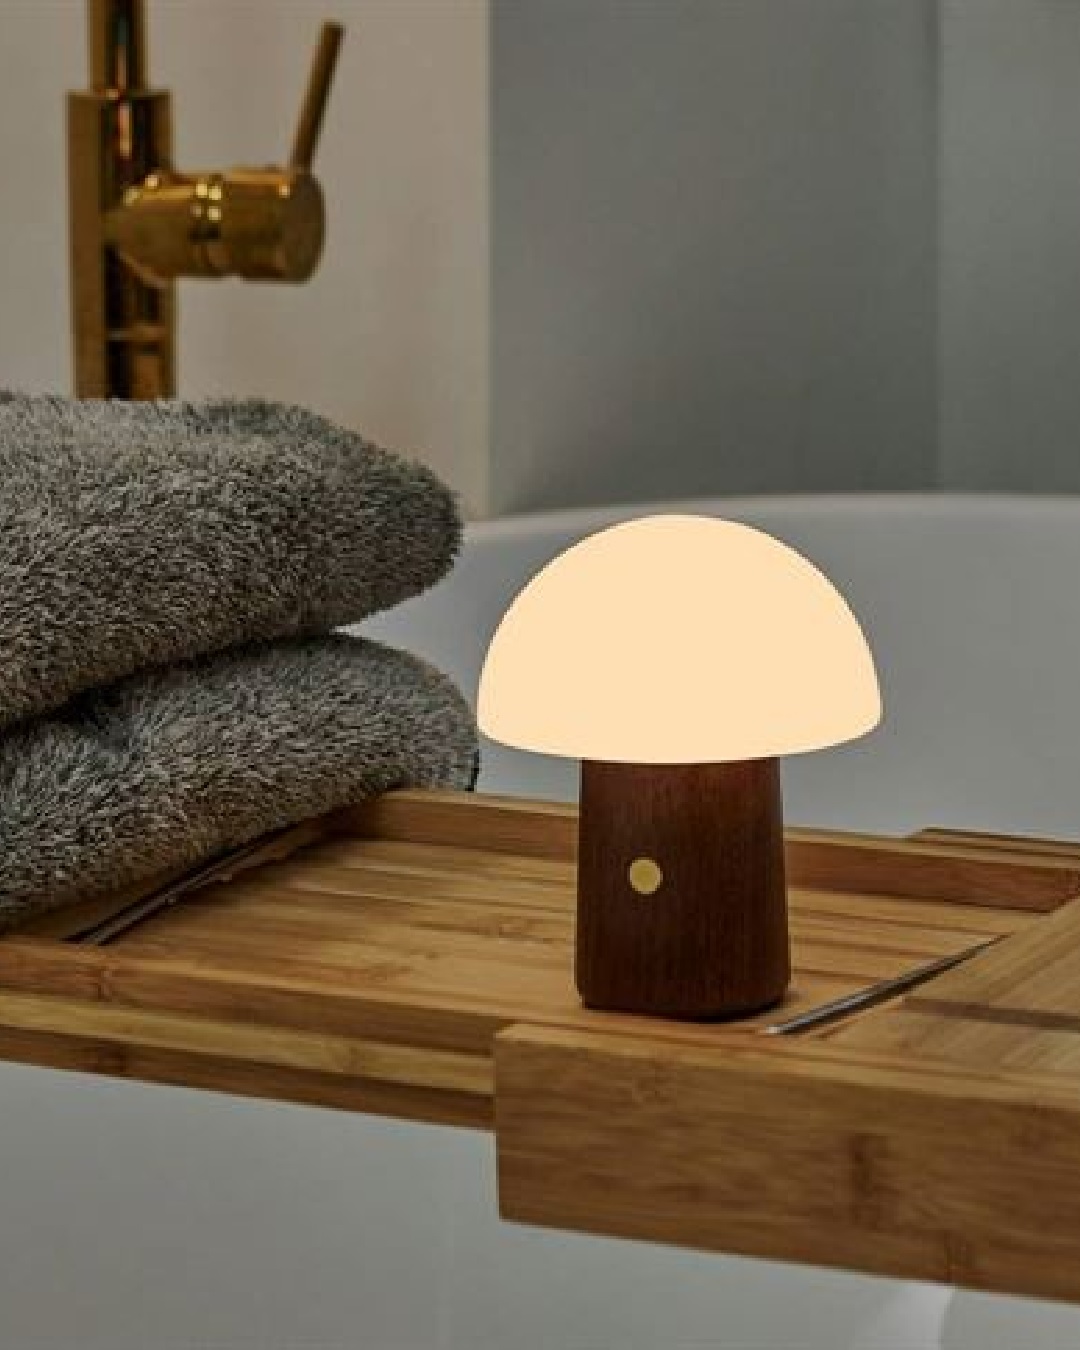 Mushroom lamp on wooden bath tray